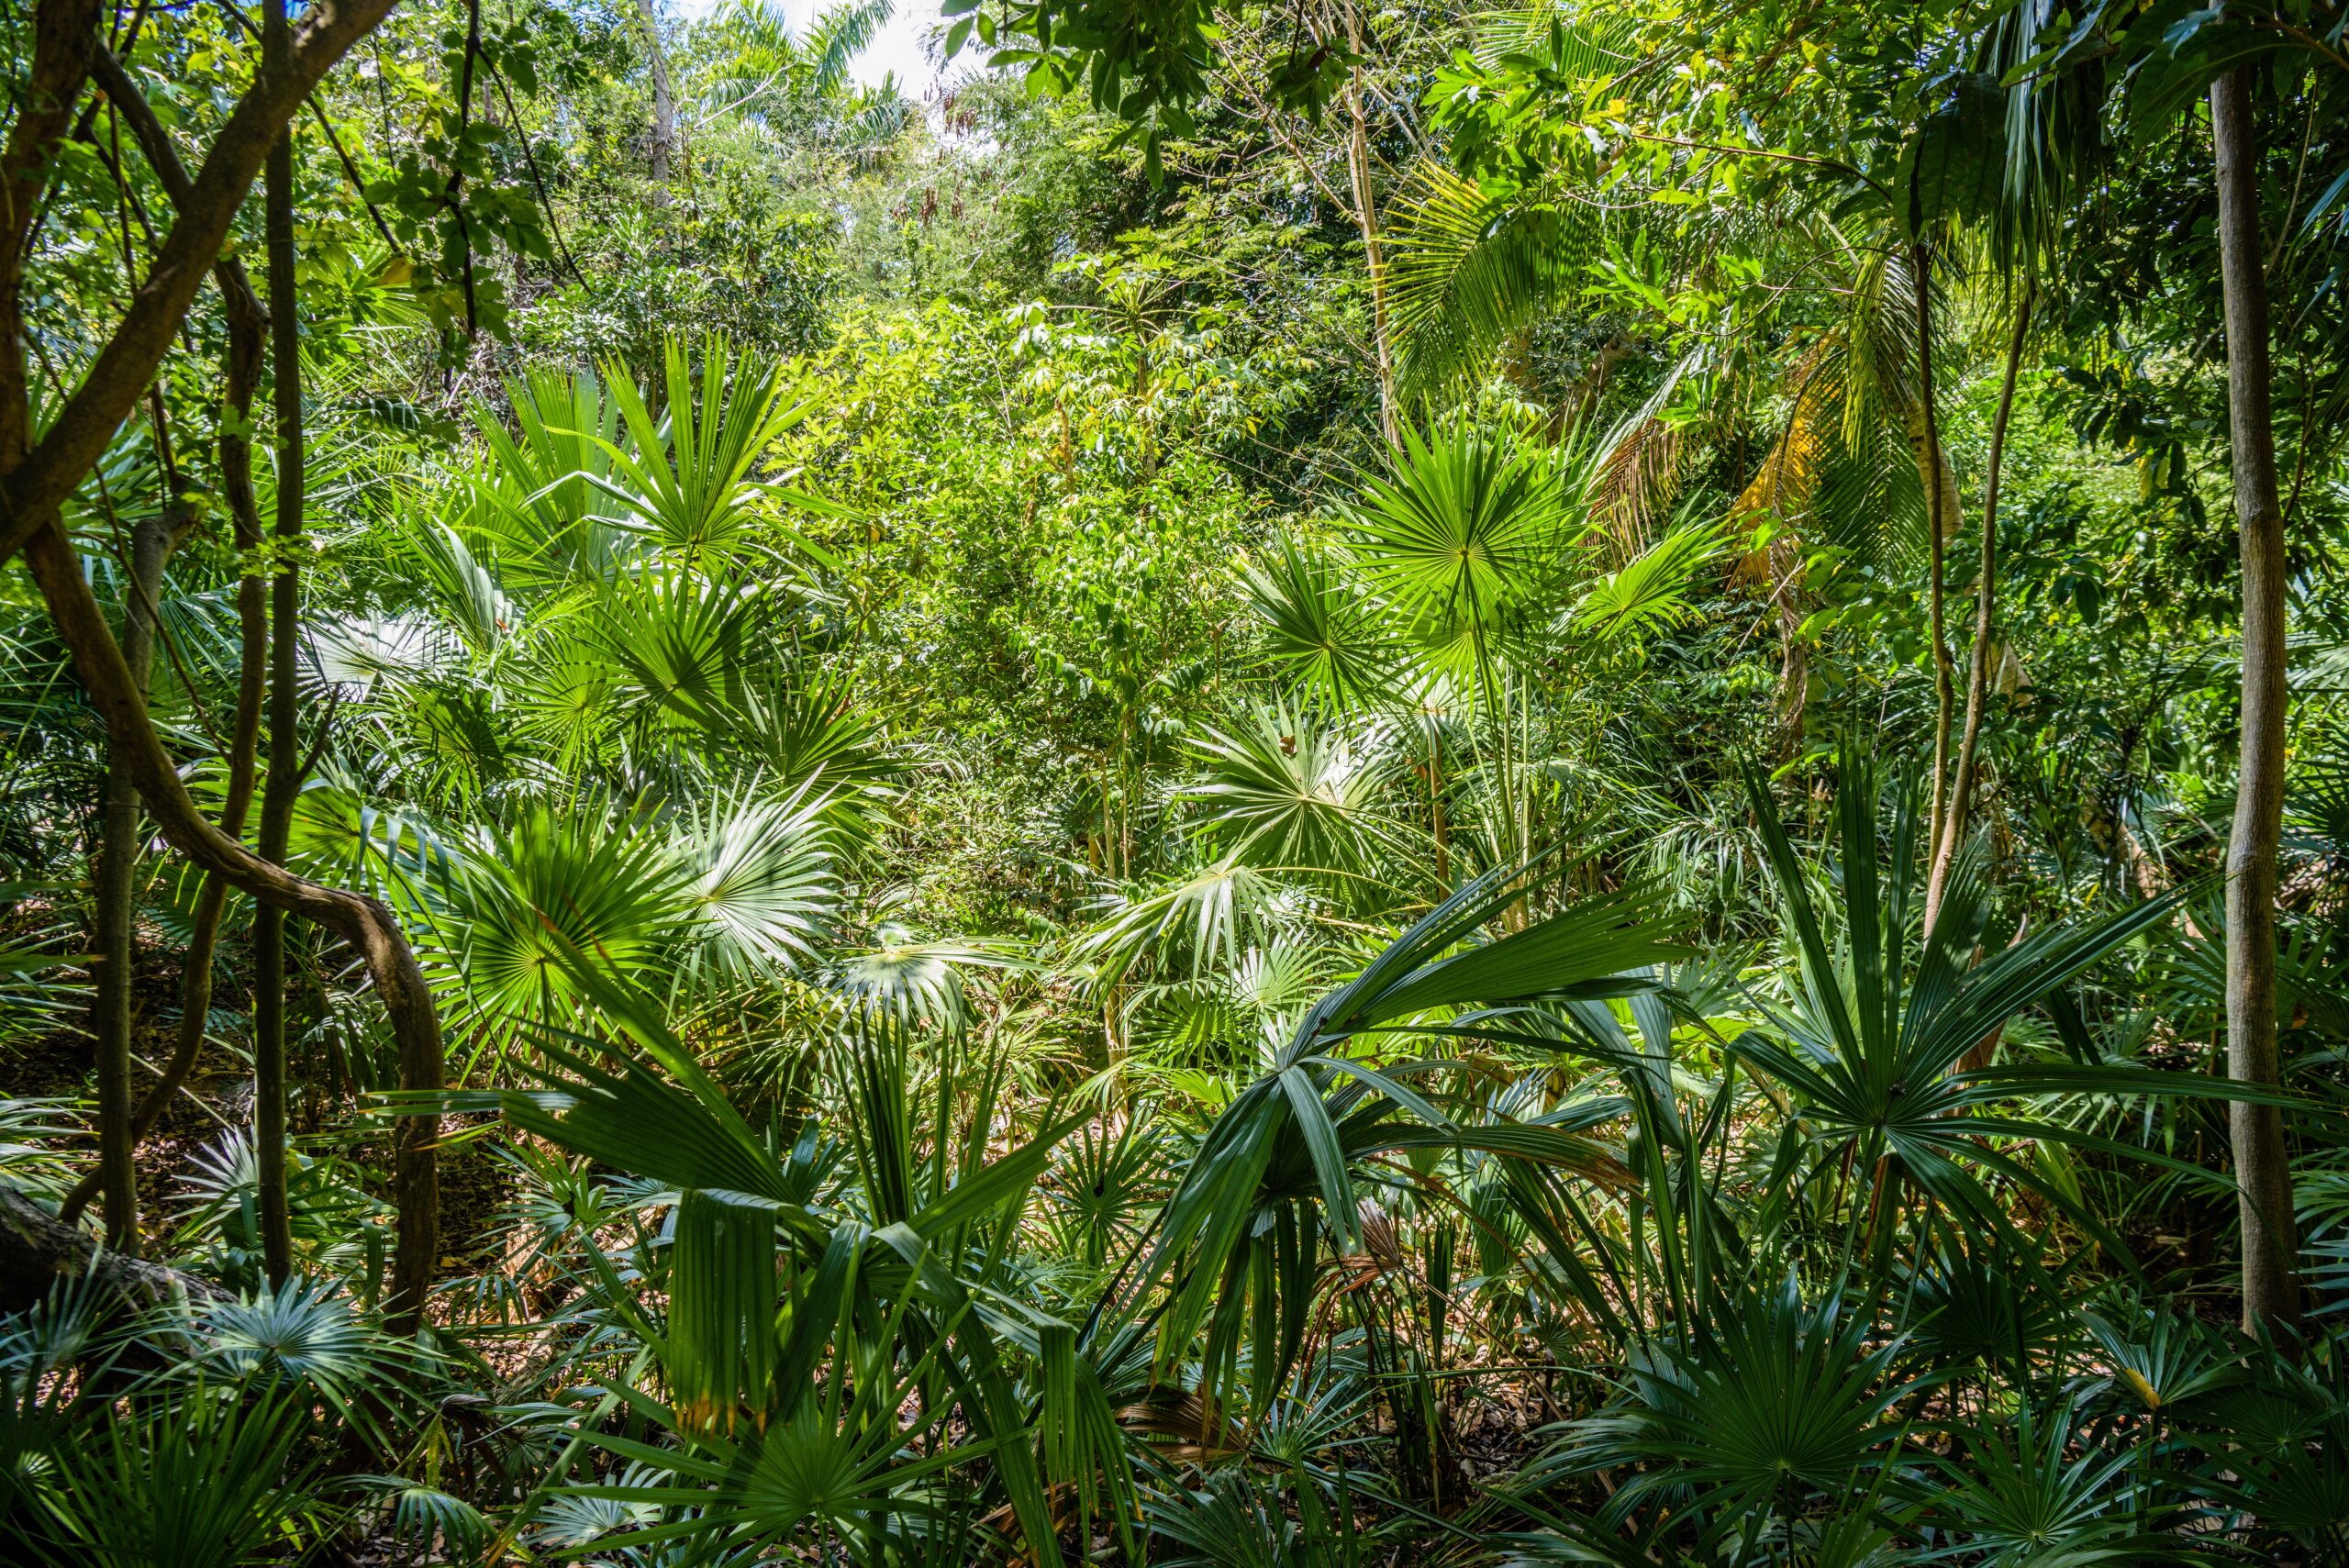 Jungle tropical forest with palms and trees, Playa del Carmen, Riviera Maya, Yu atan, Mexico.